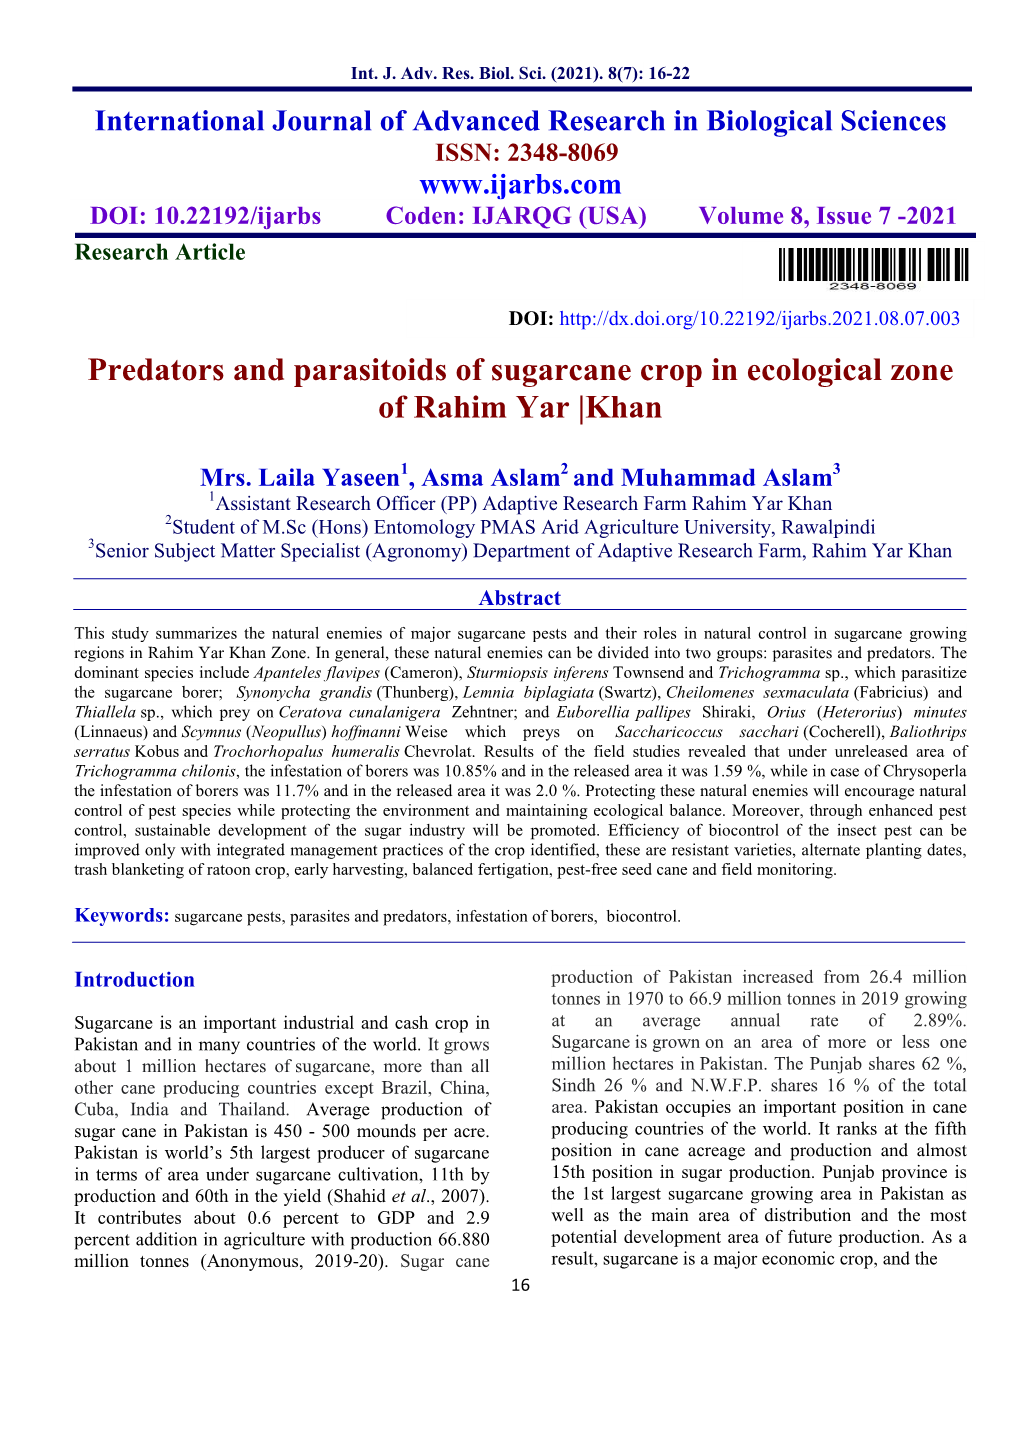 Predators and Parasitoids of Sugarcane Crop in Ecological Zone of Rahim Yar |Khan